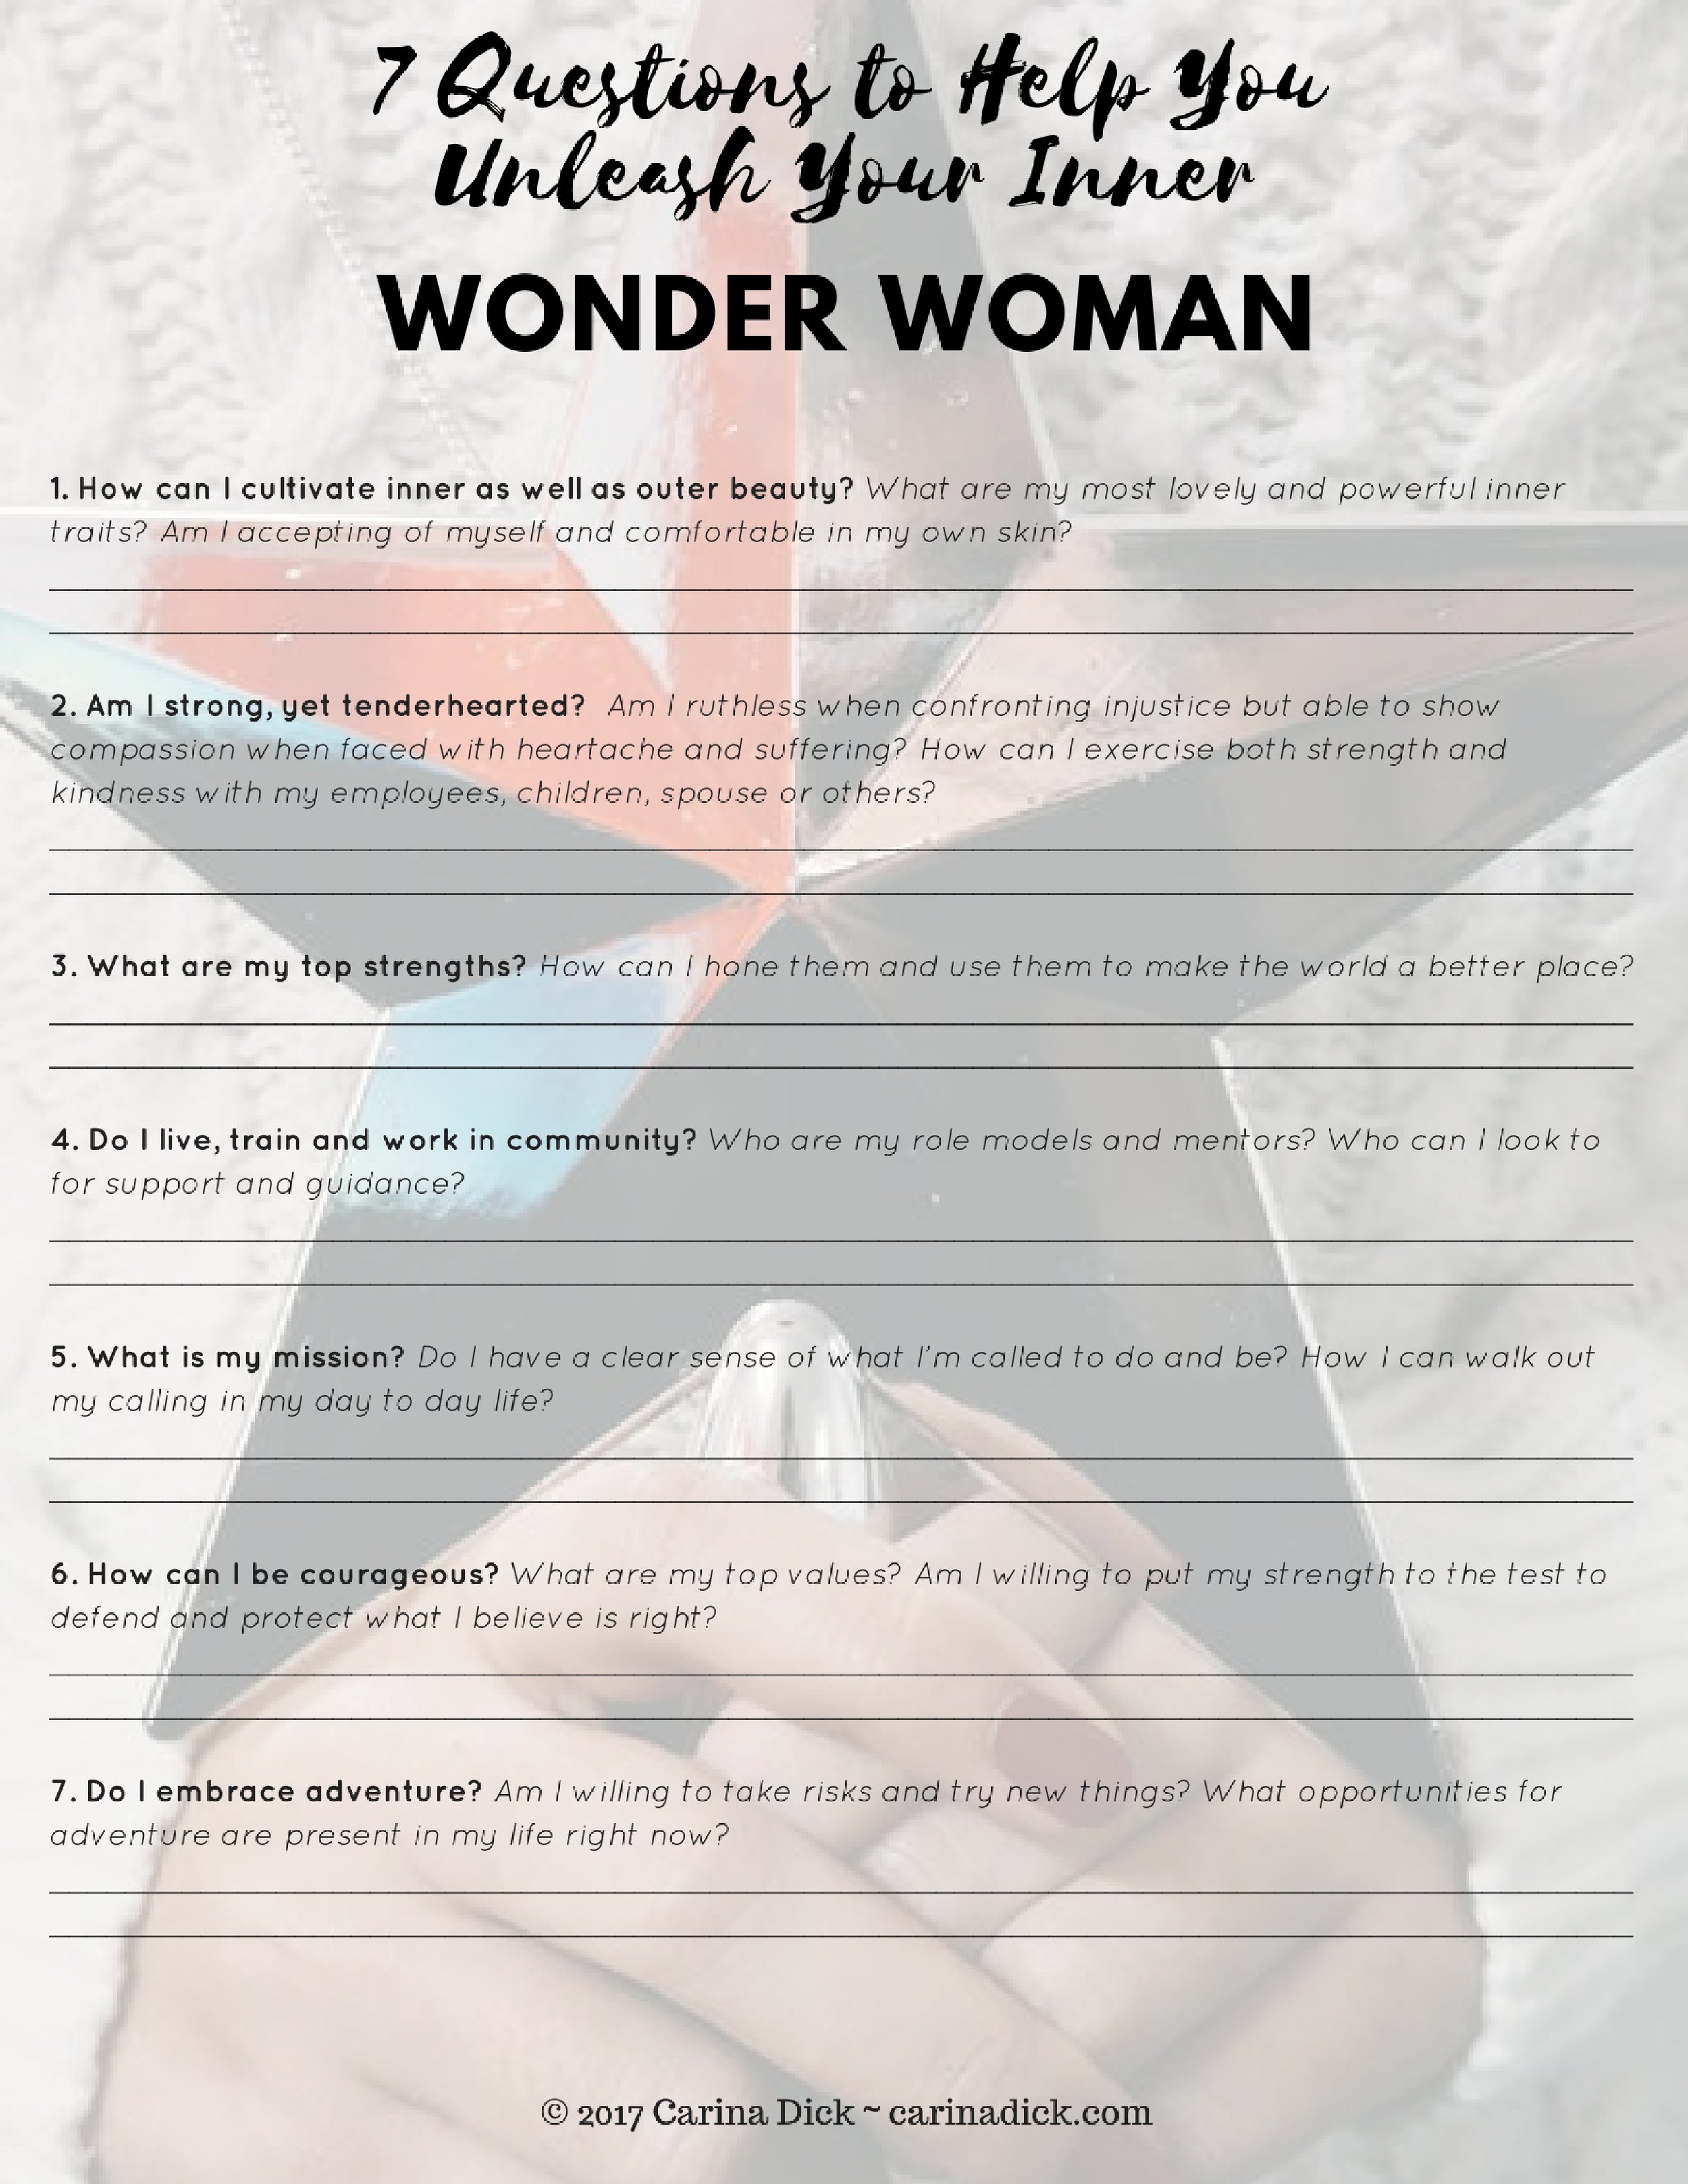 Wonder Woman 7 Questions.jpg